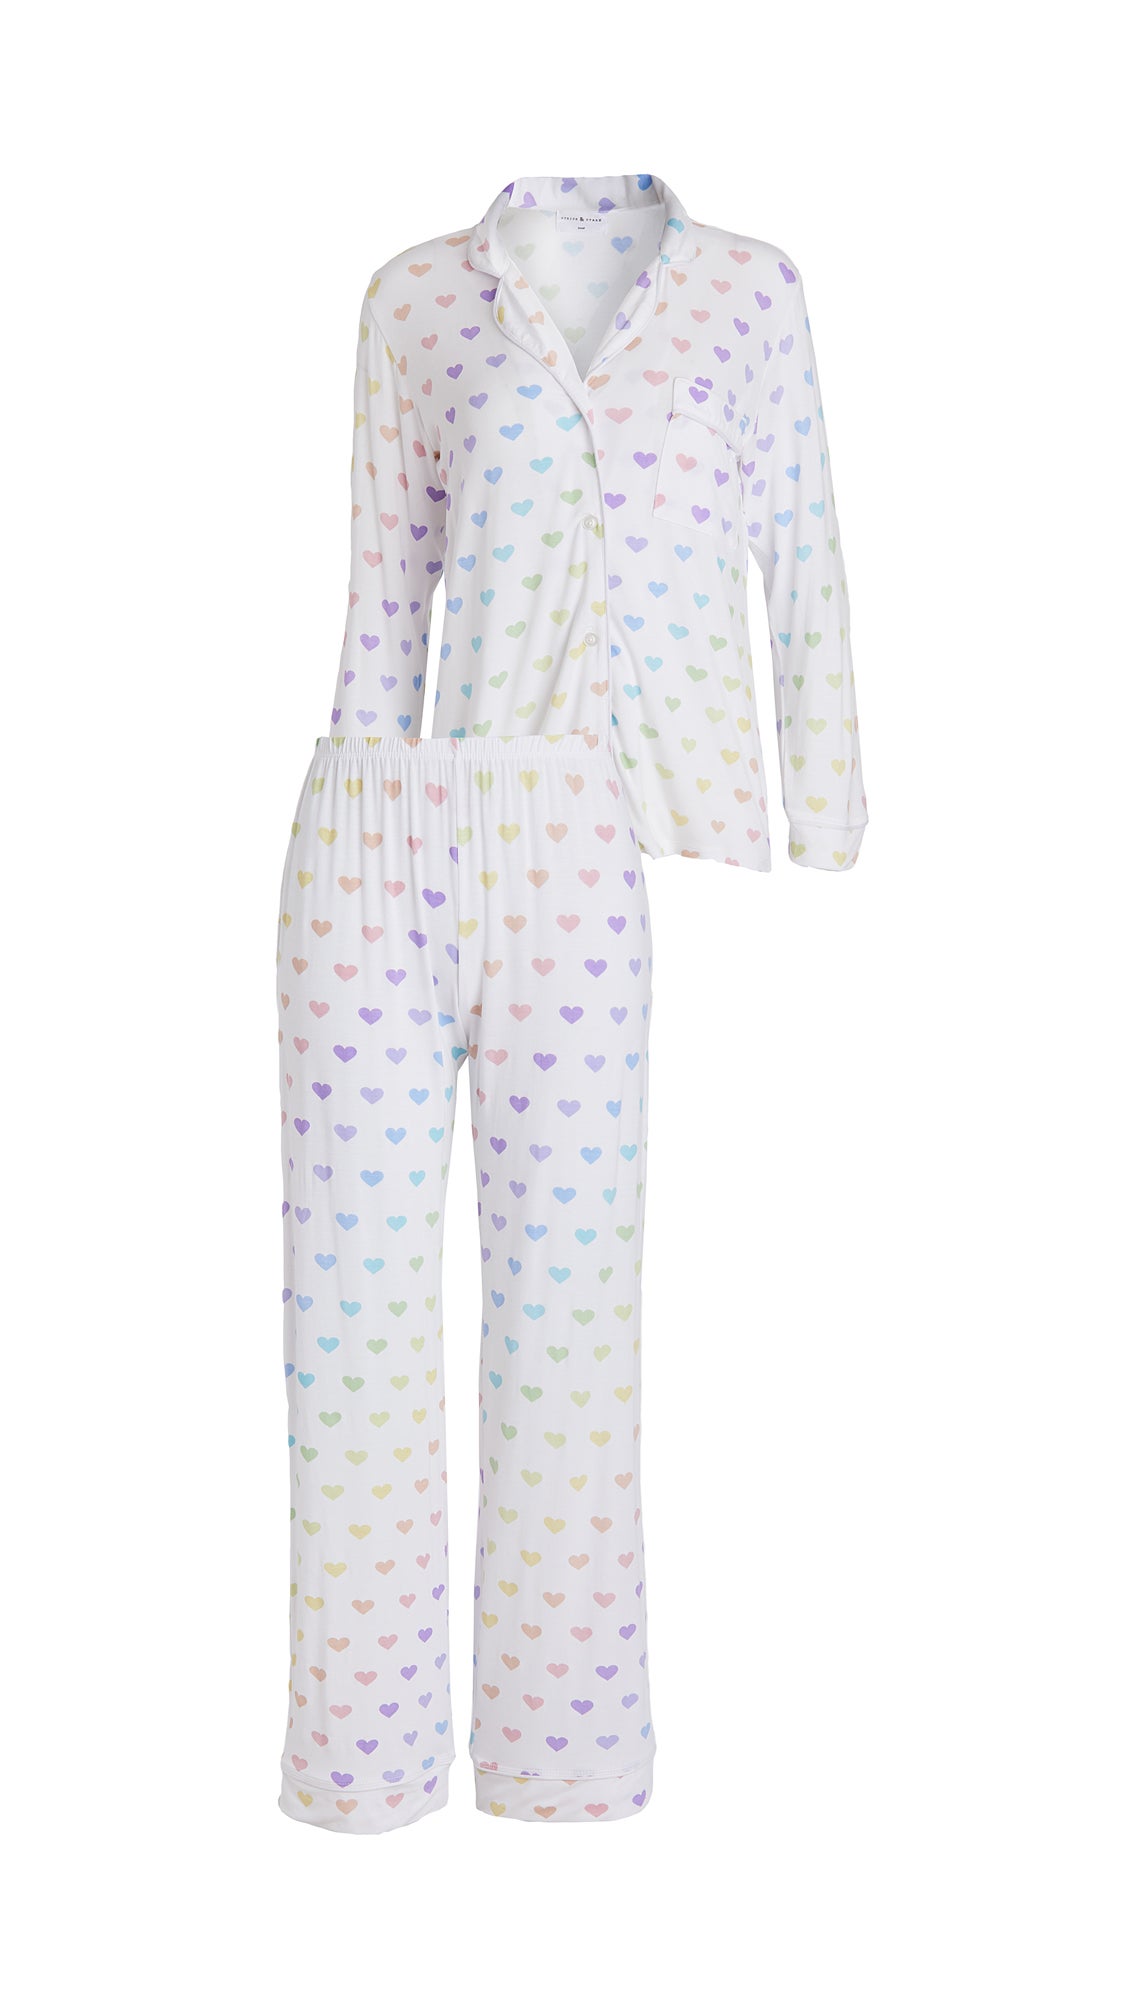 Stripe & Stare Multi Heart Pajama Set